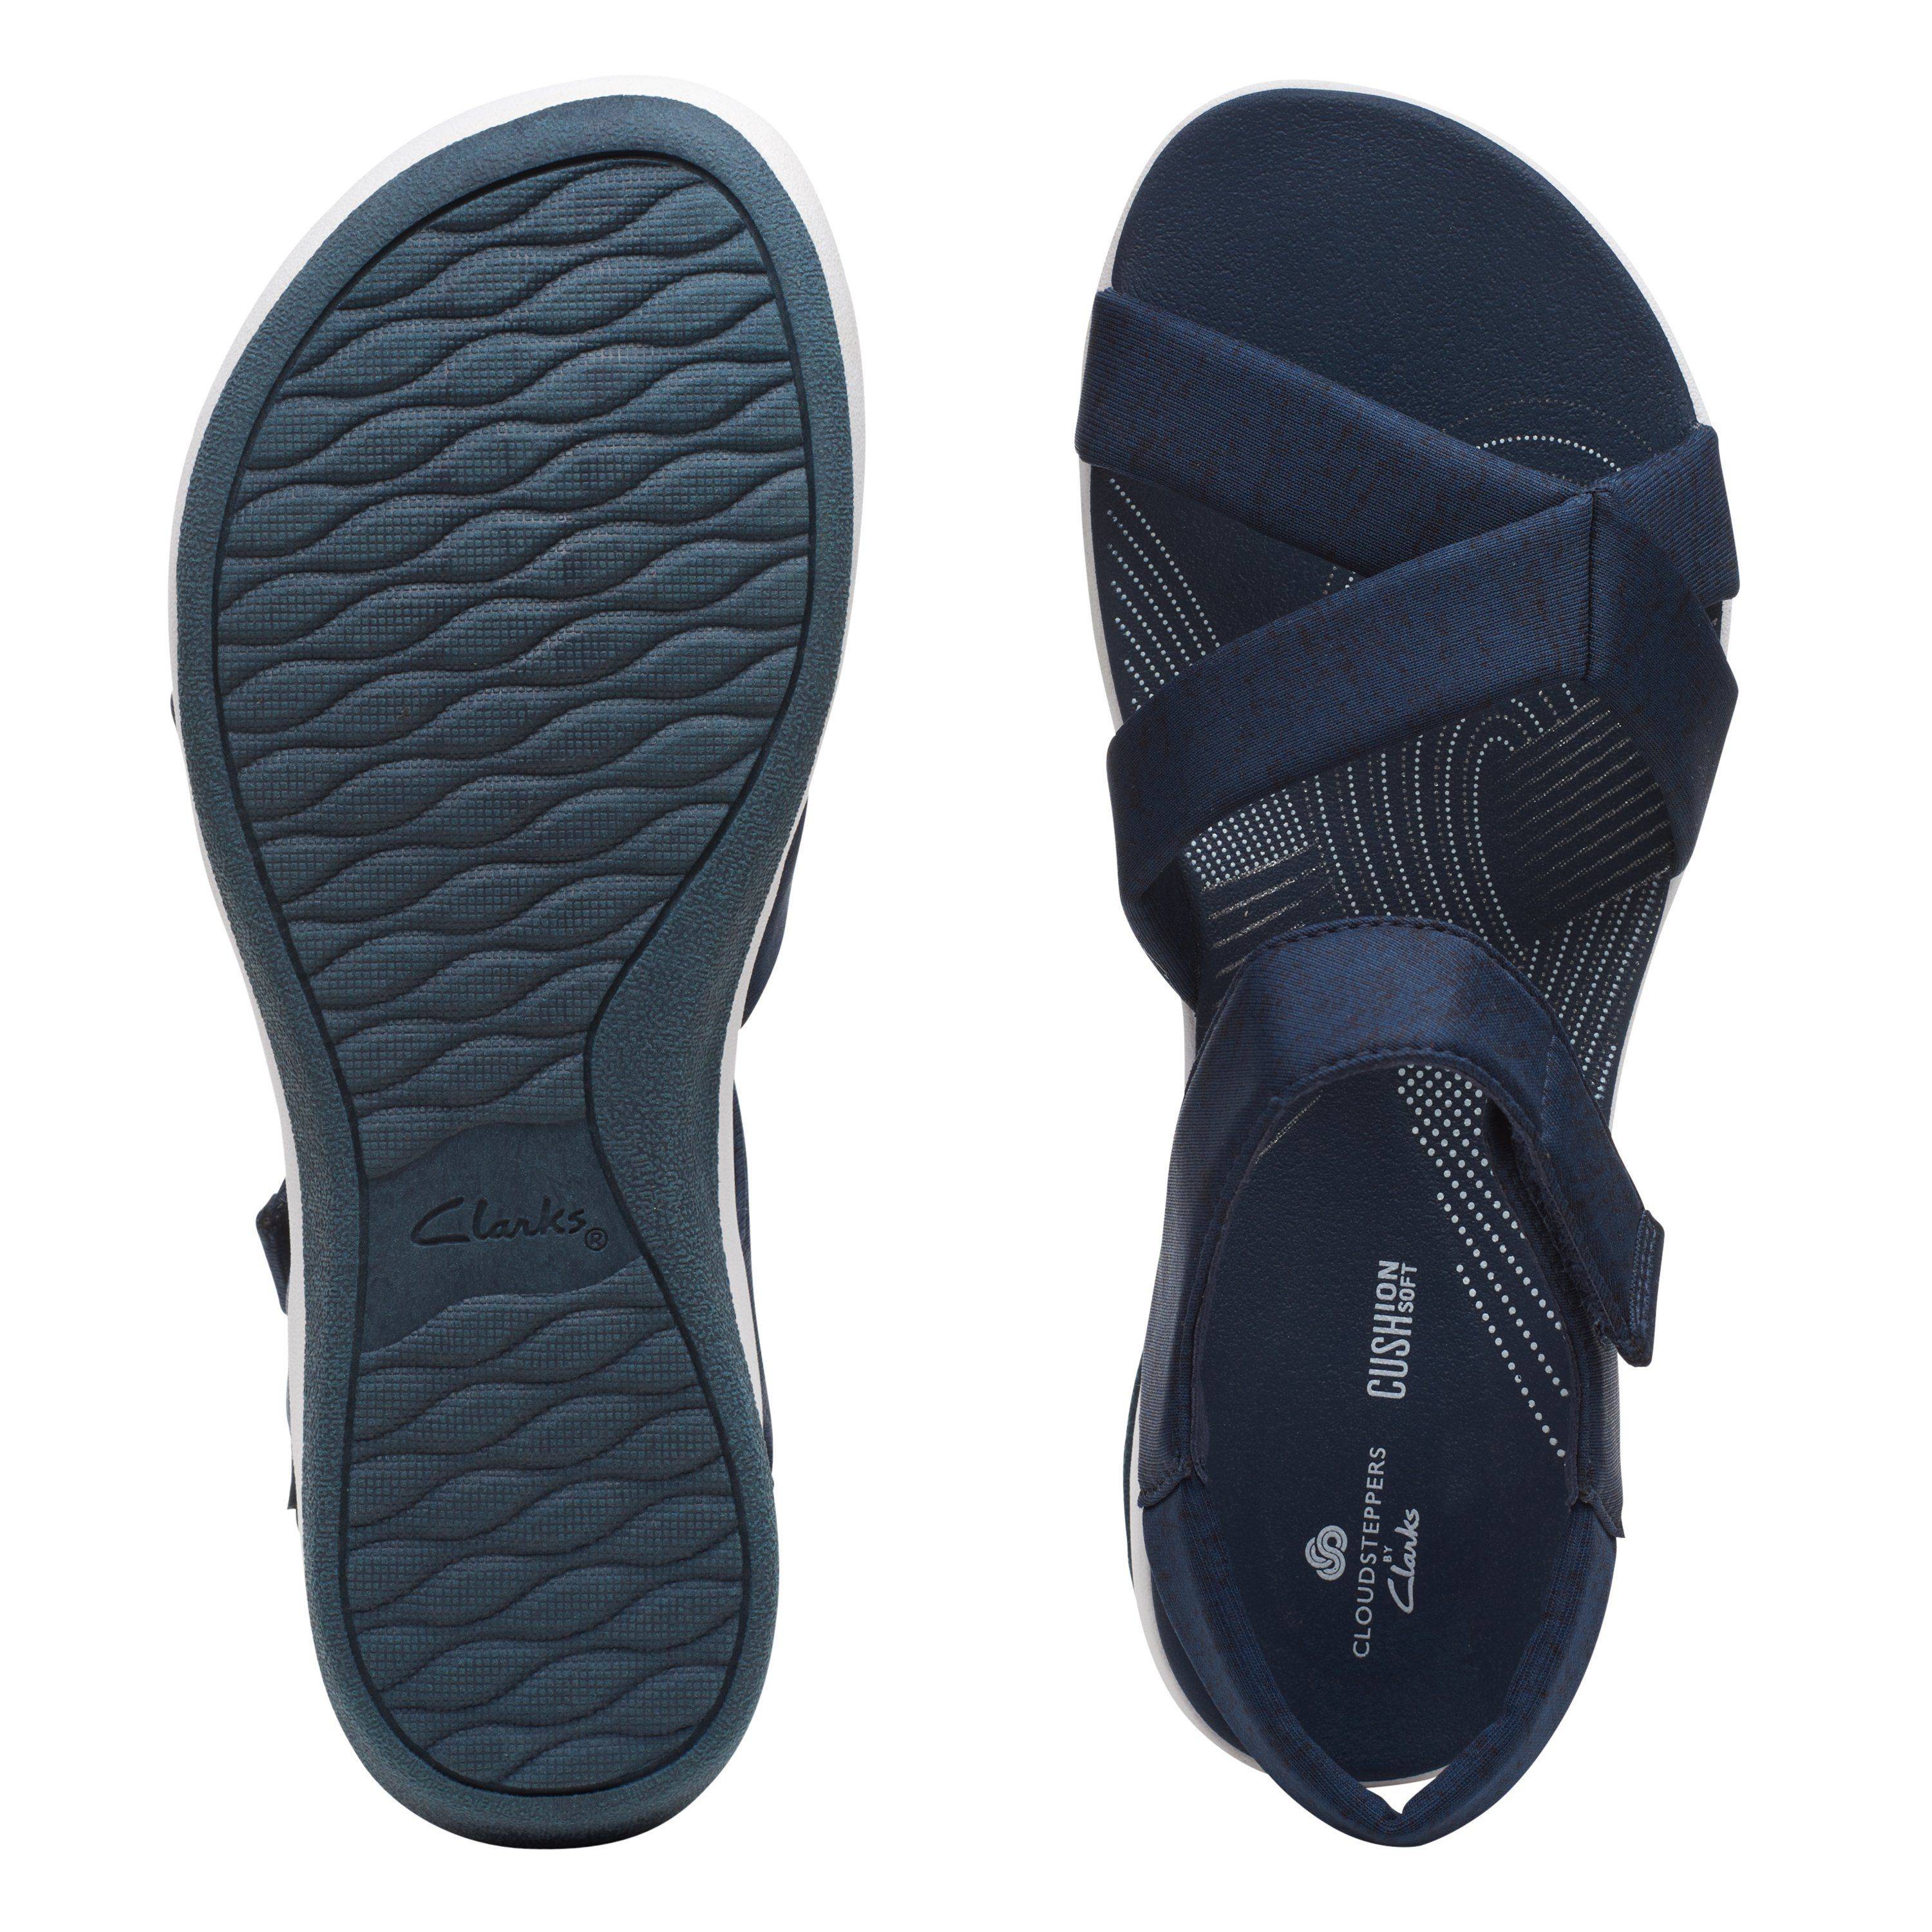 Женские сандалии Clarks, синие, цвет синий, размер 41.5 - фото 7